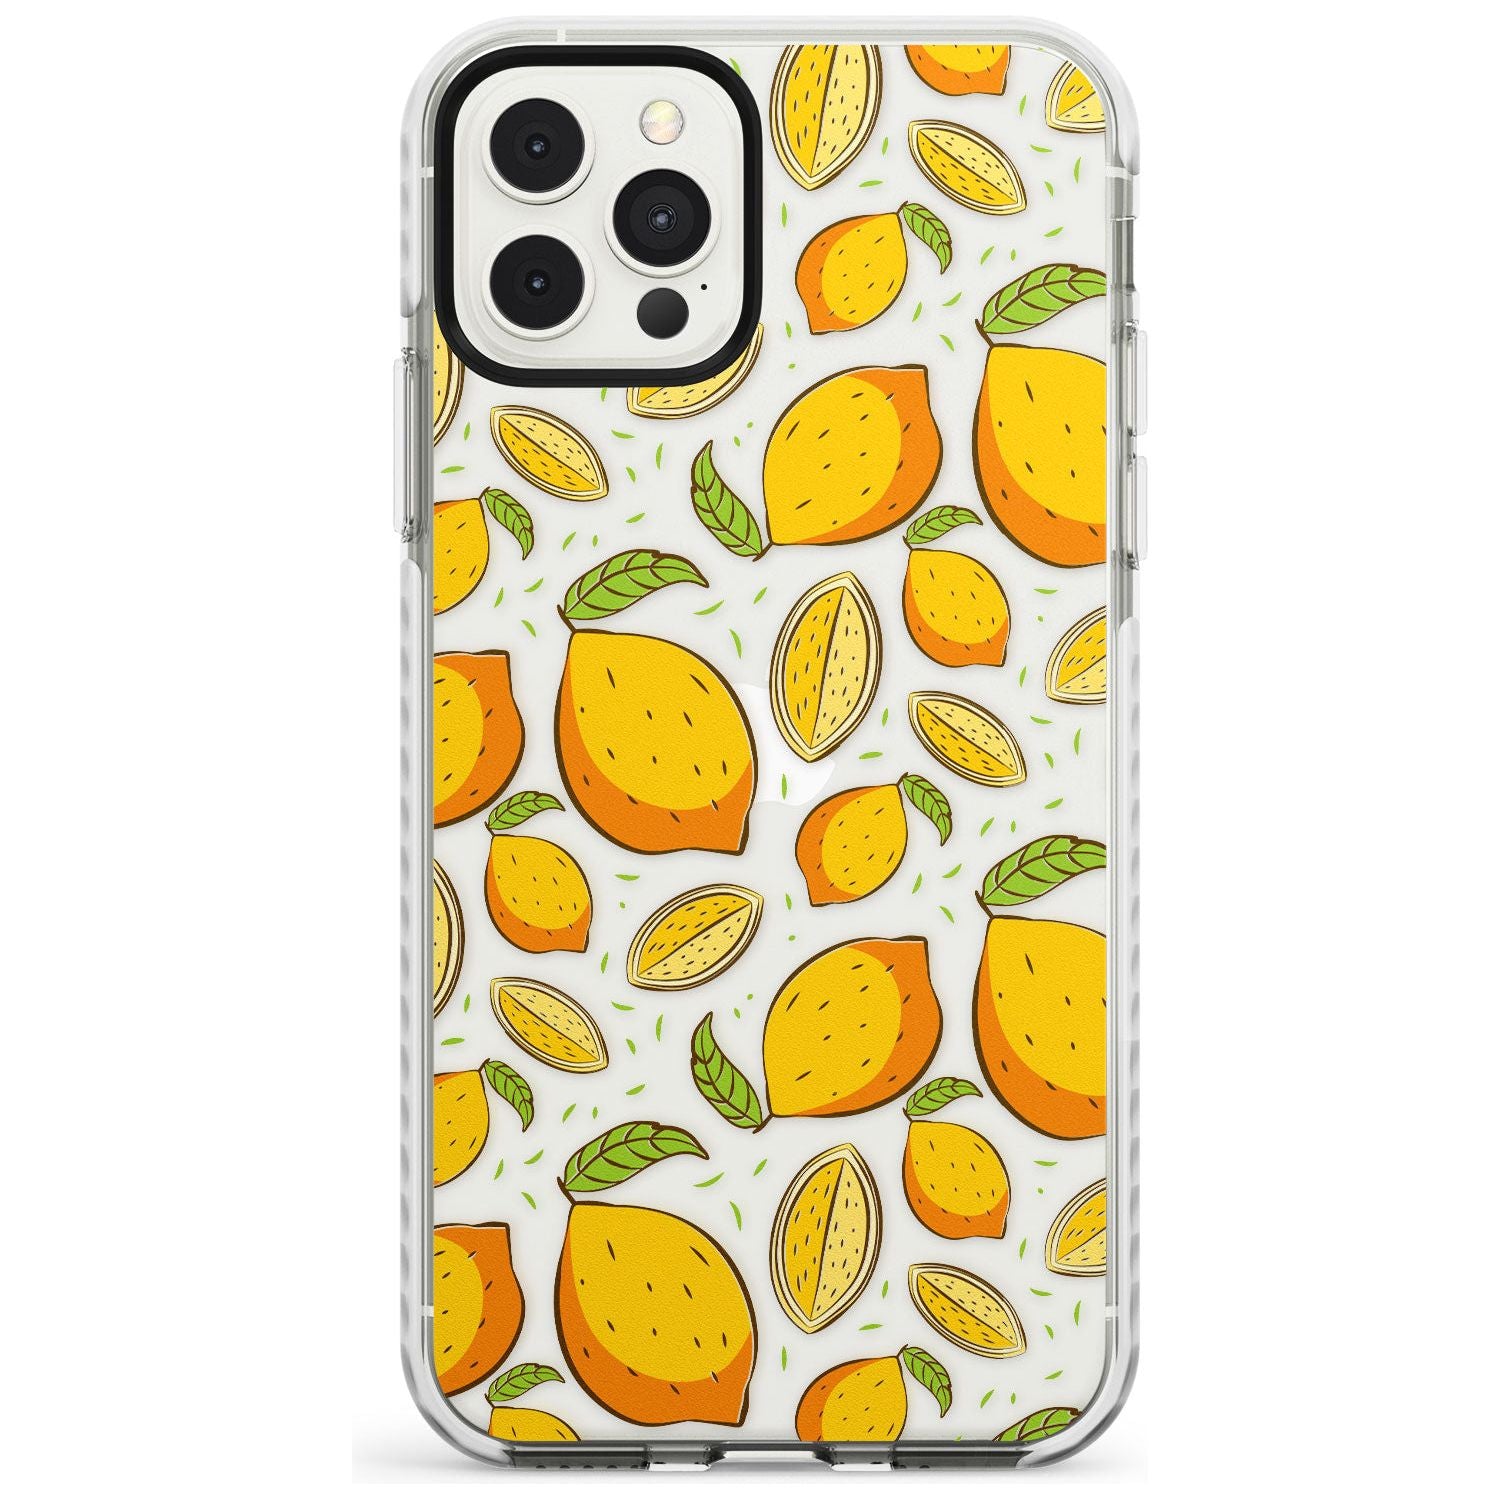 Lemon Pattern Impact Phone Case for iPhone 11 Pro Max